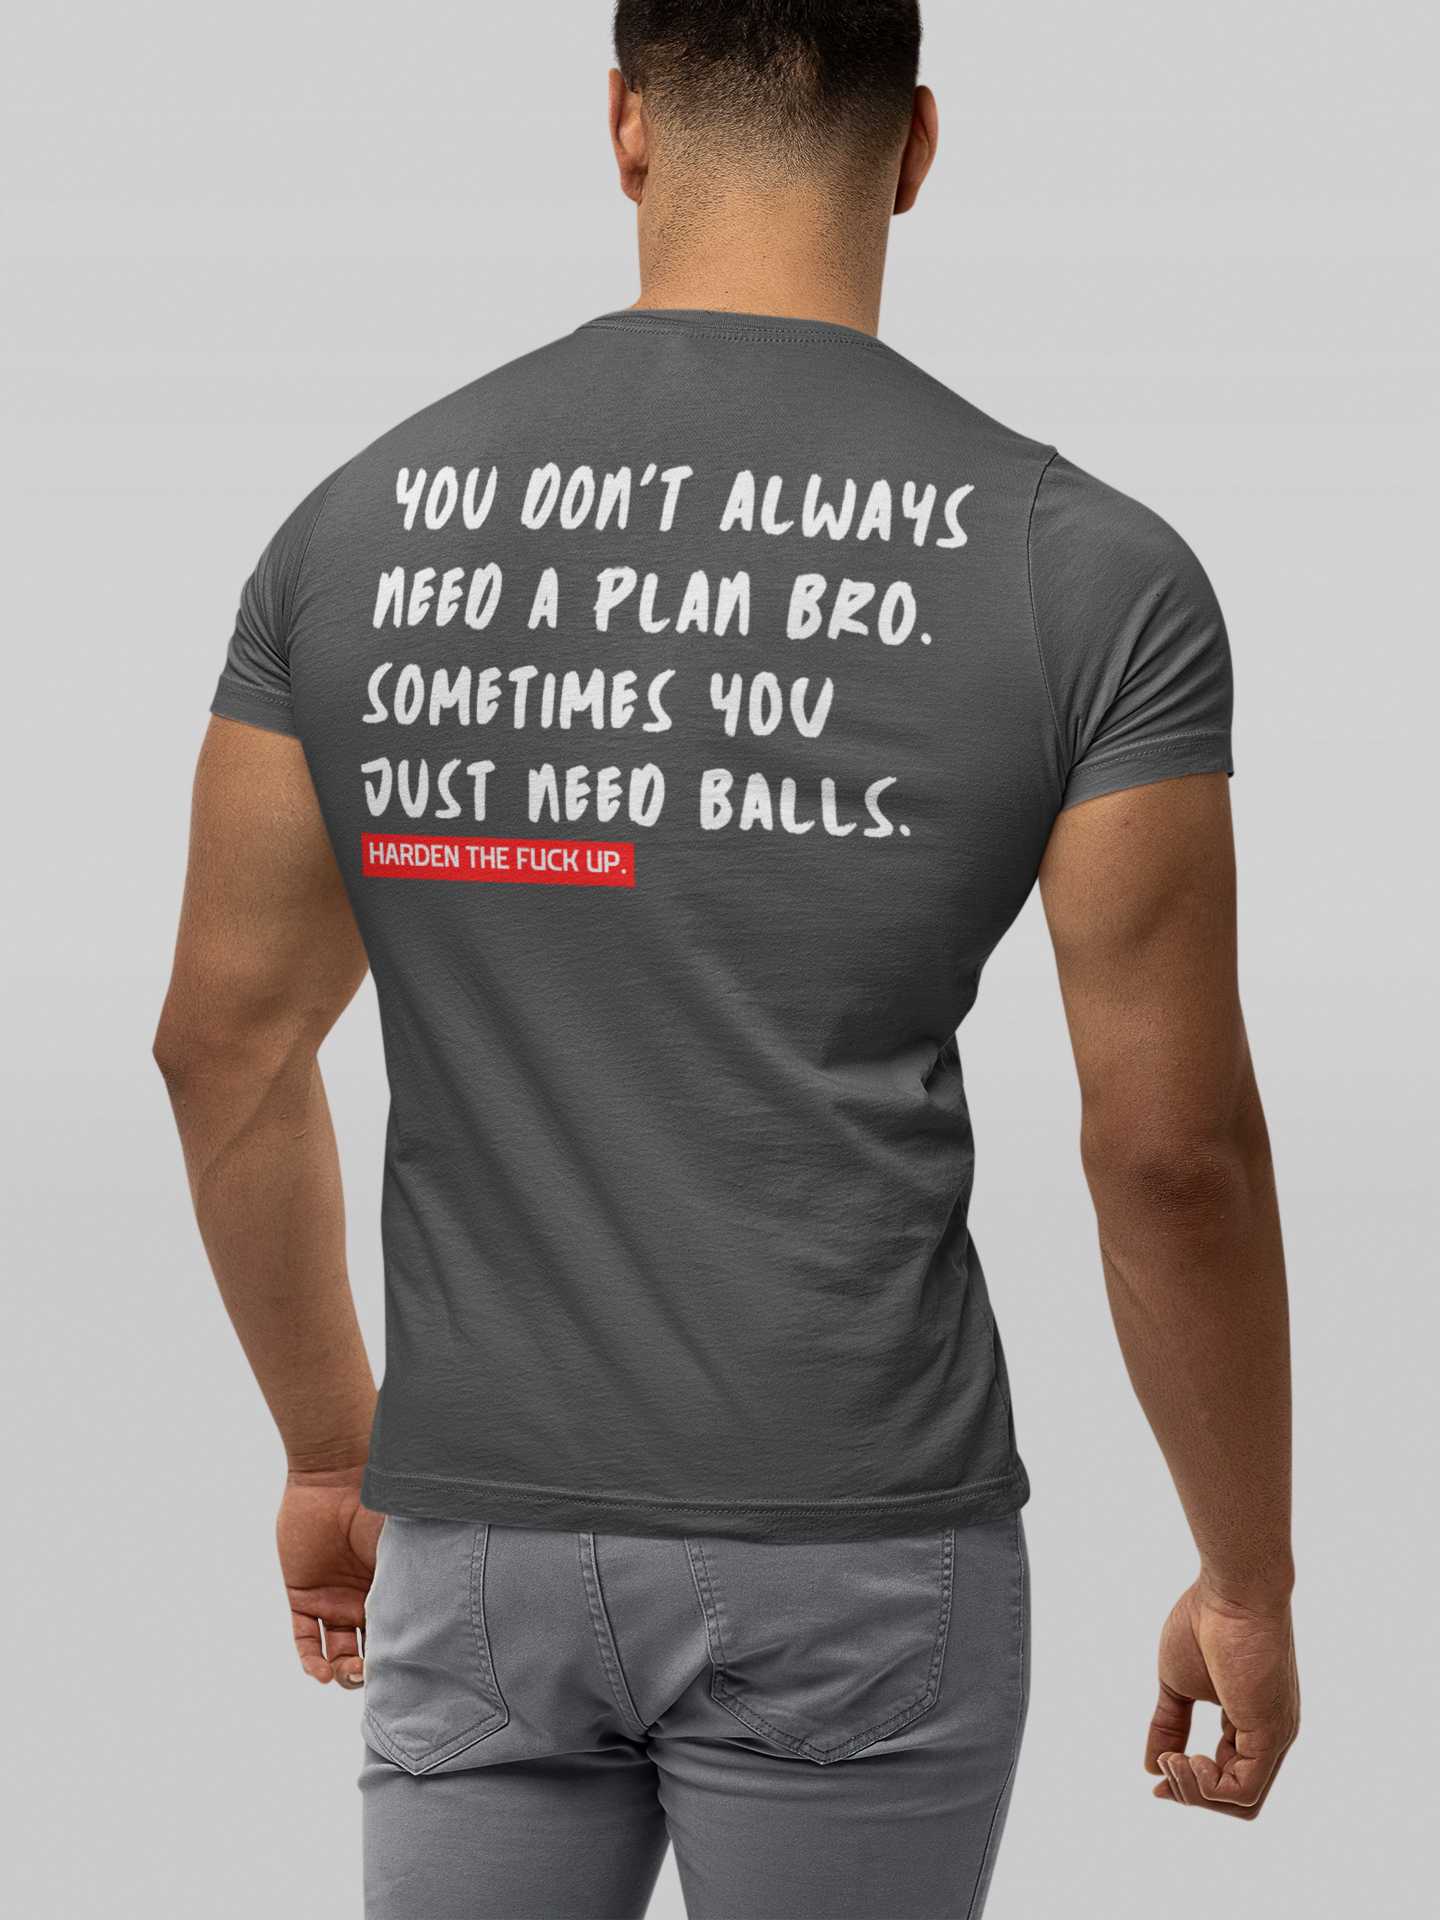 Do not need a plan bro - T-Shirt Strong Soul Shirts & Tops